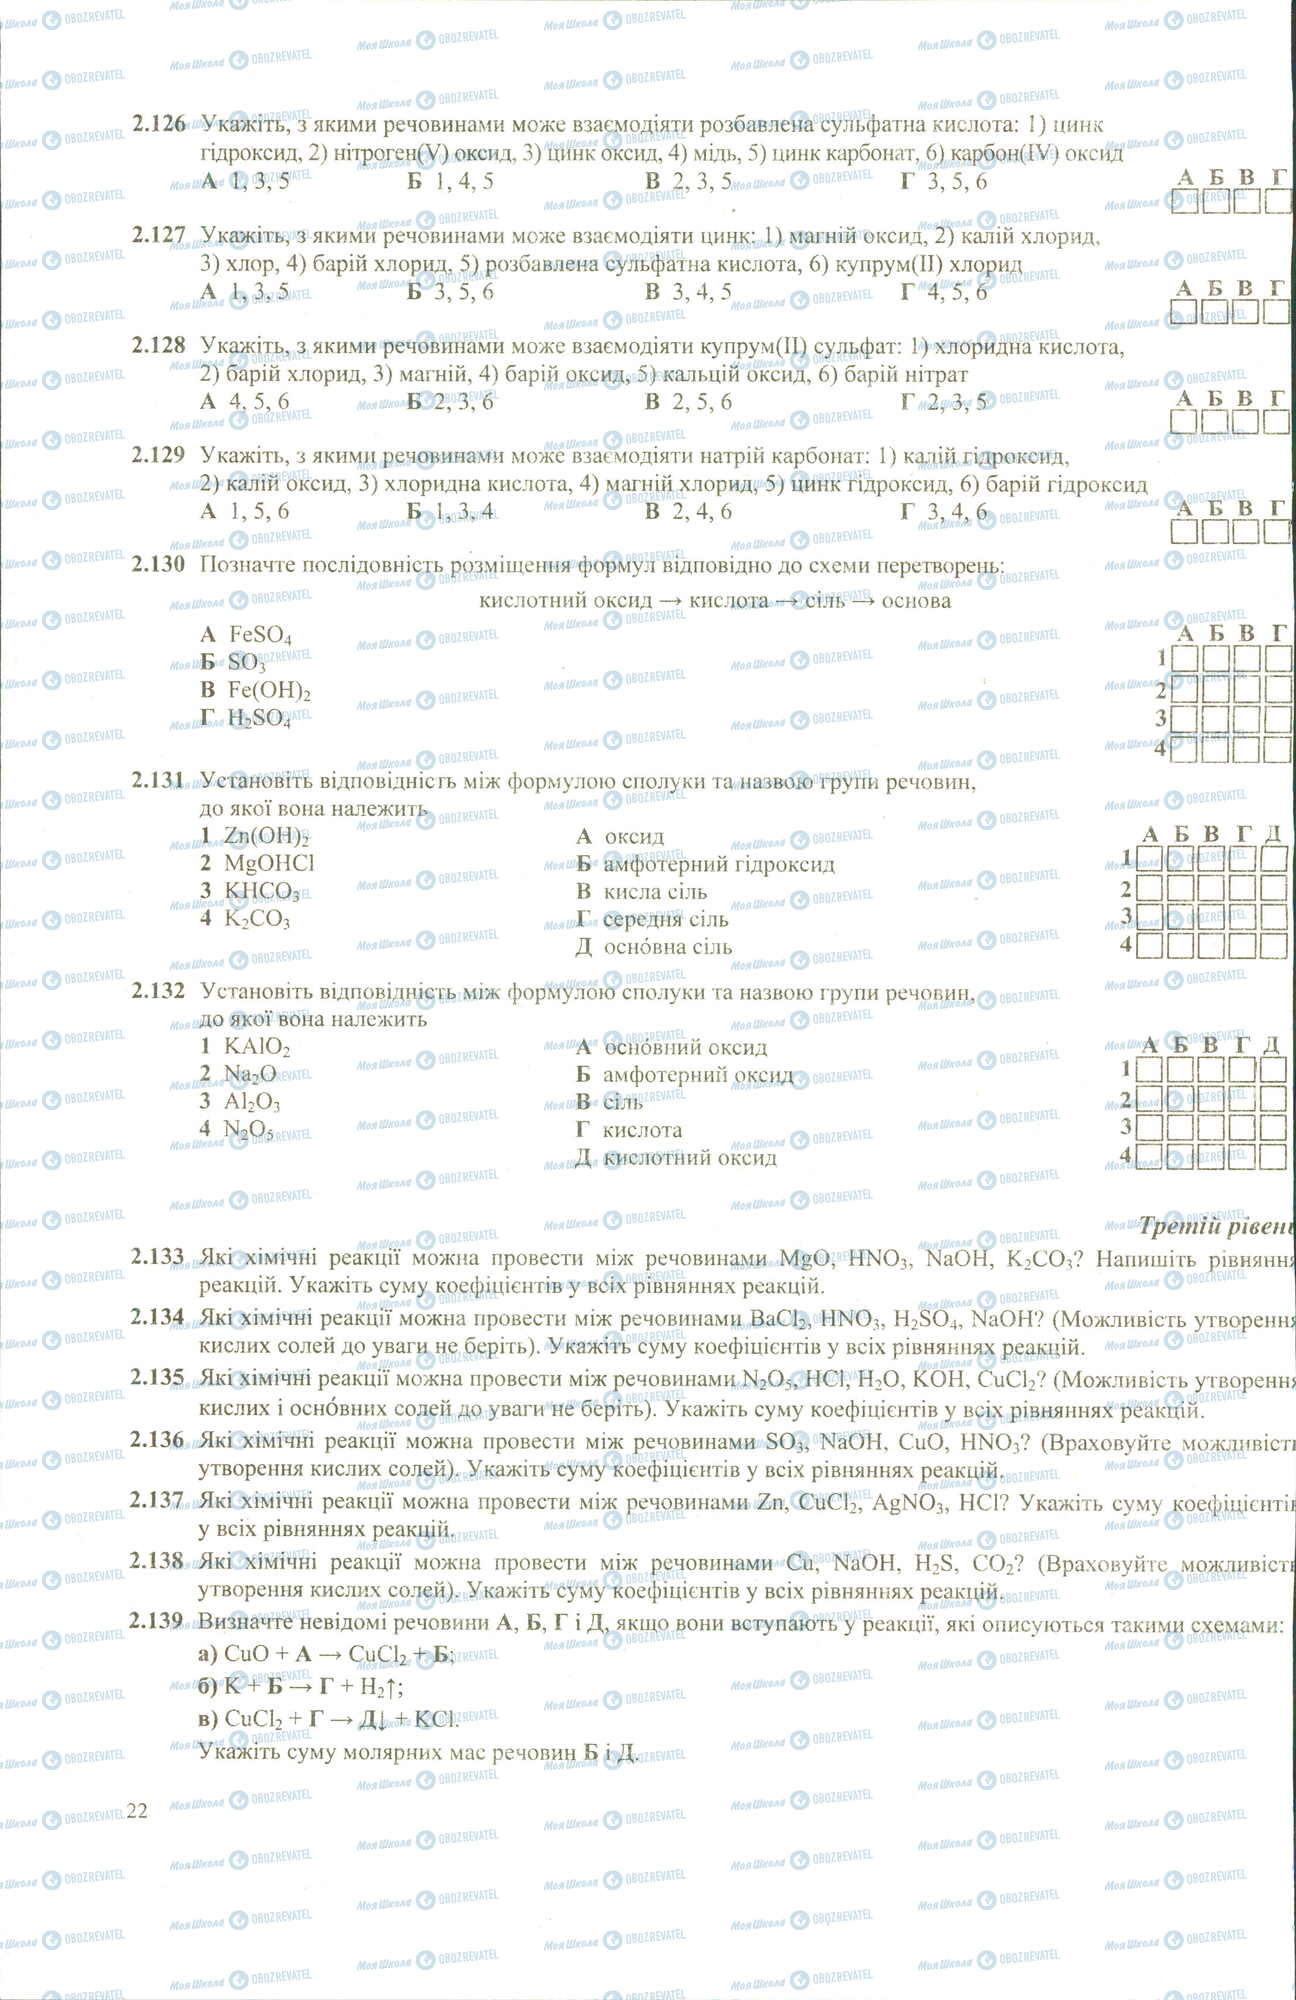 ЗНО Химия 11 класс страница 126-139